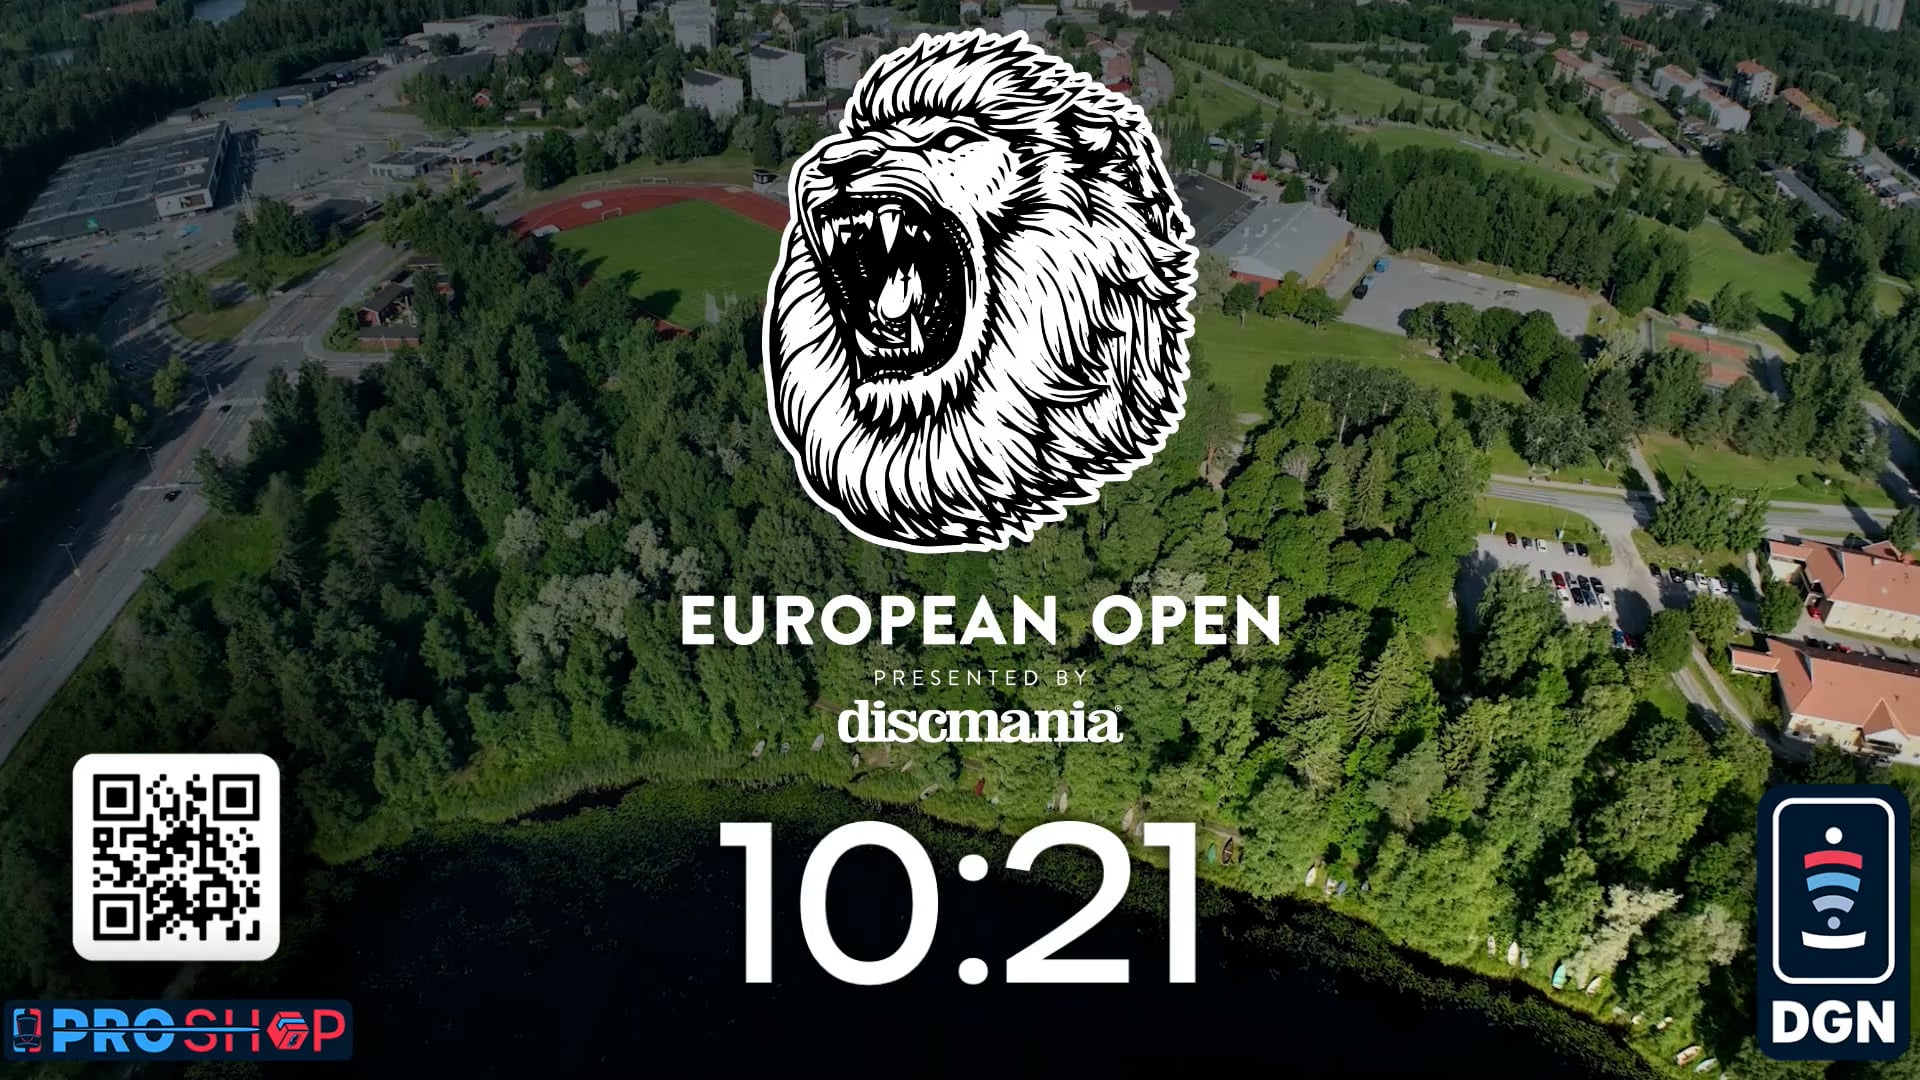 Presidents Cup 2023 European Open on Vimeo